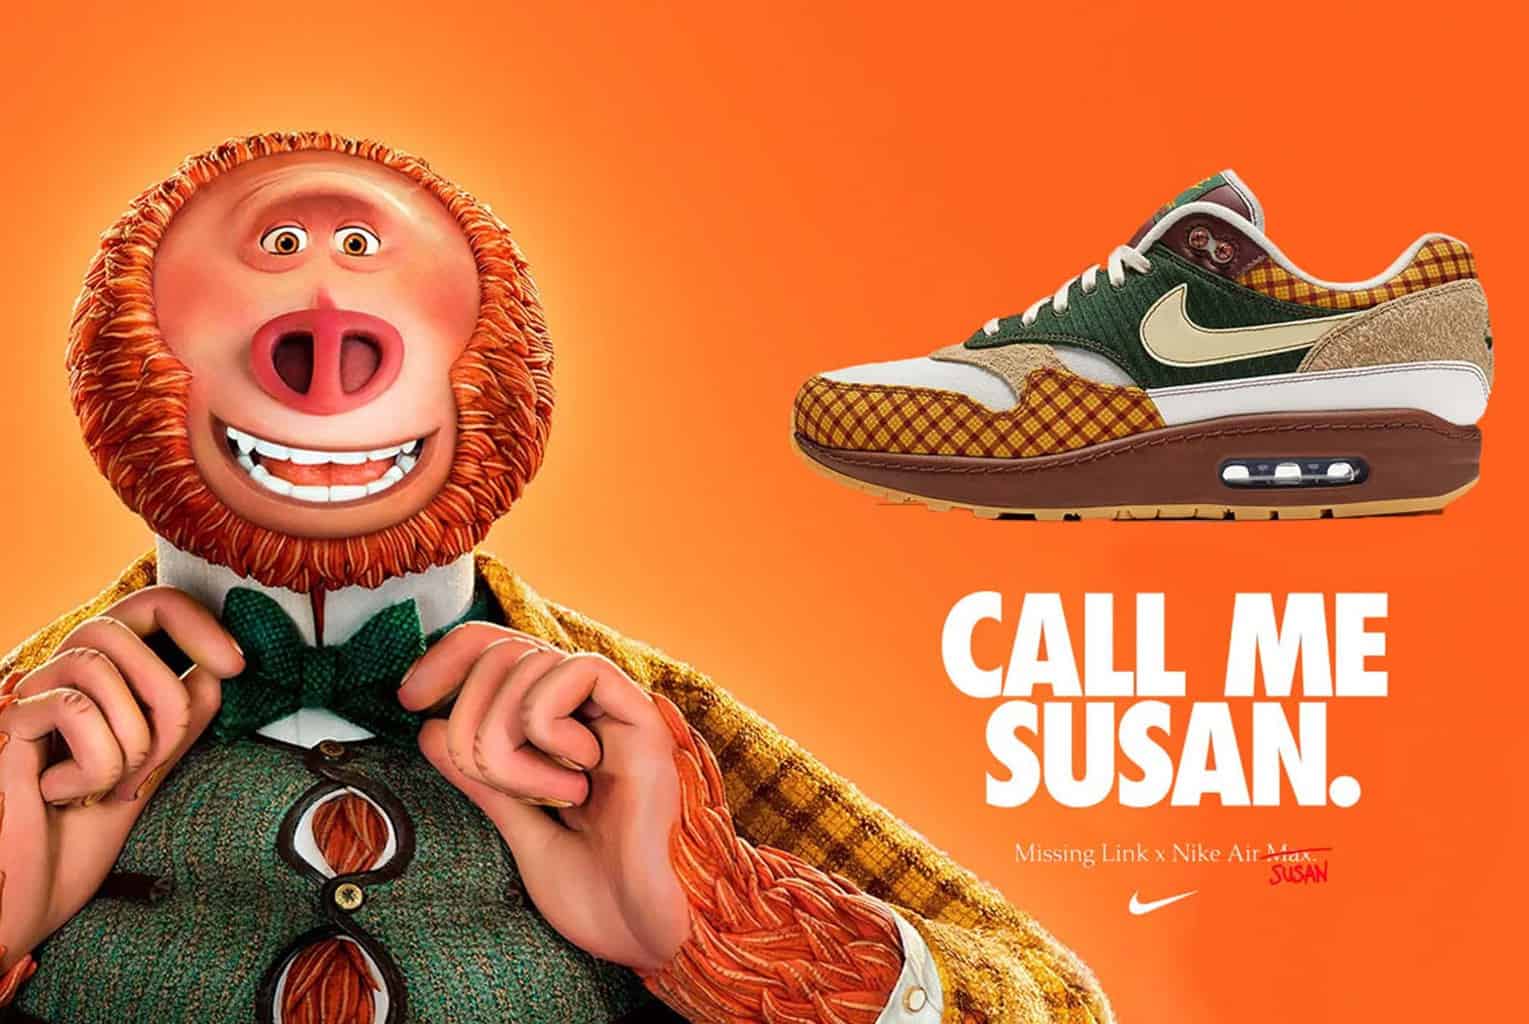 Nike Air Max \u0026 Missing Link “Susan 